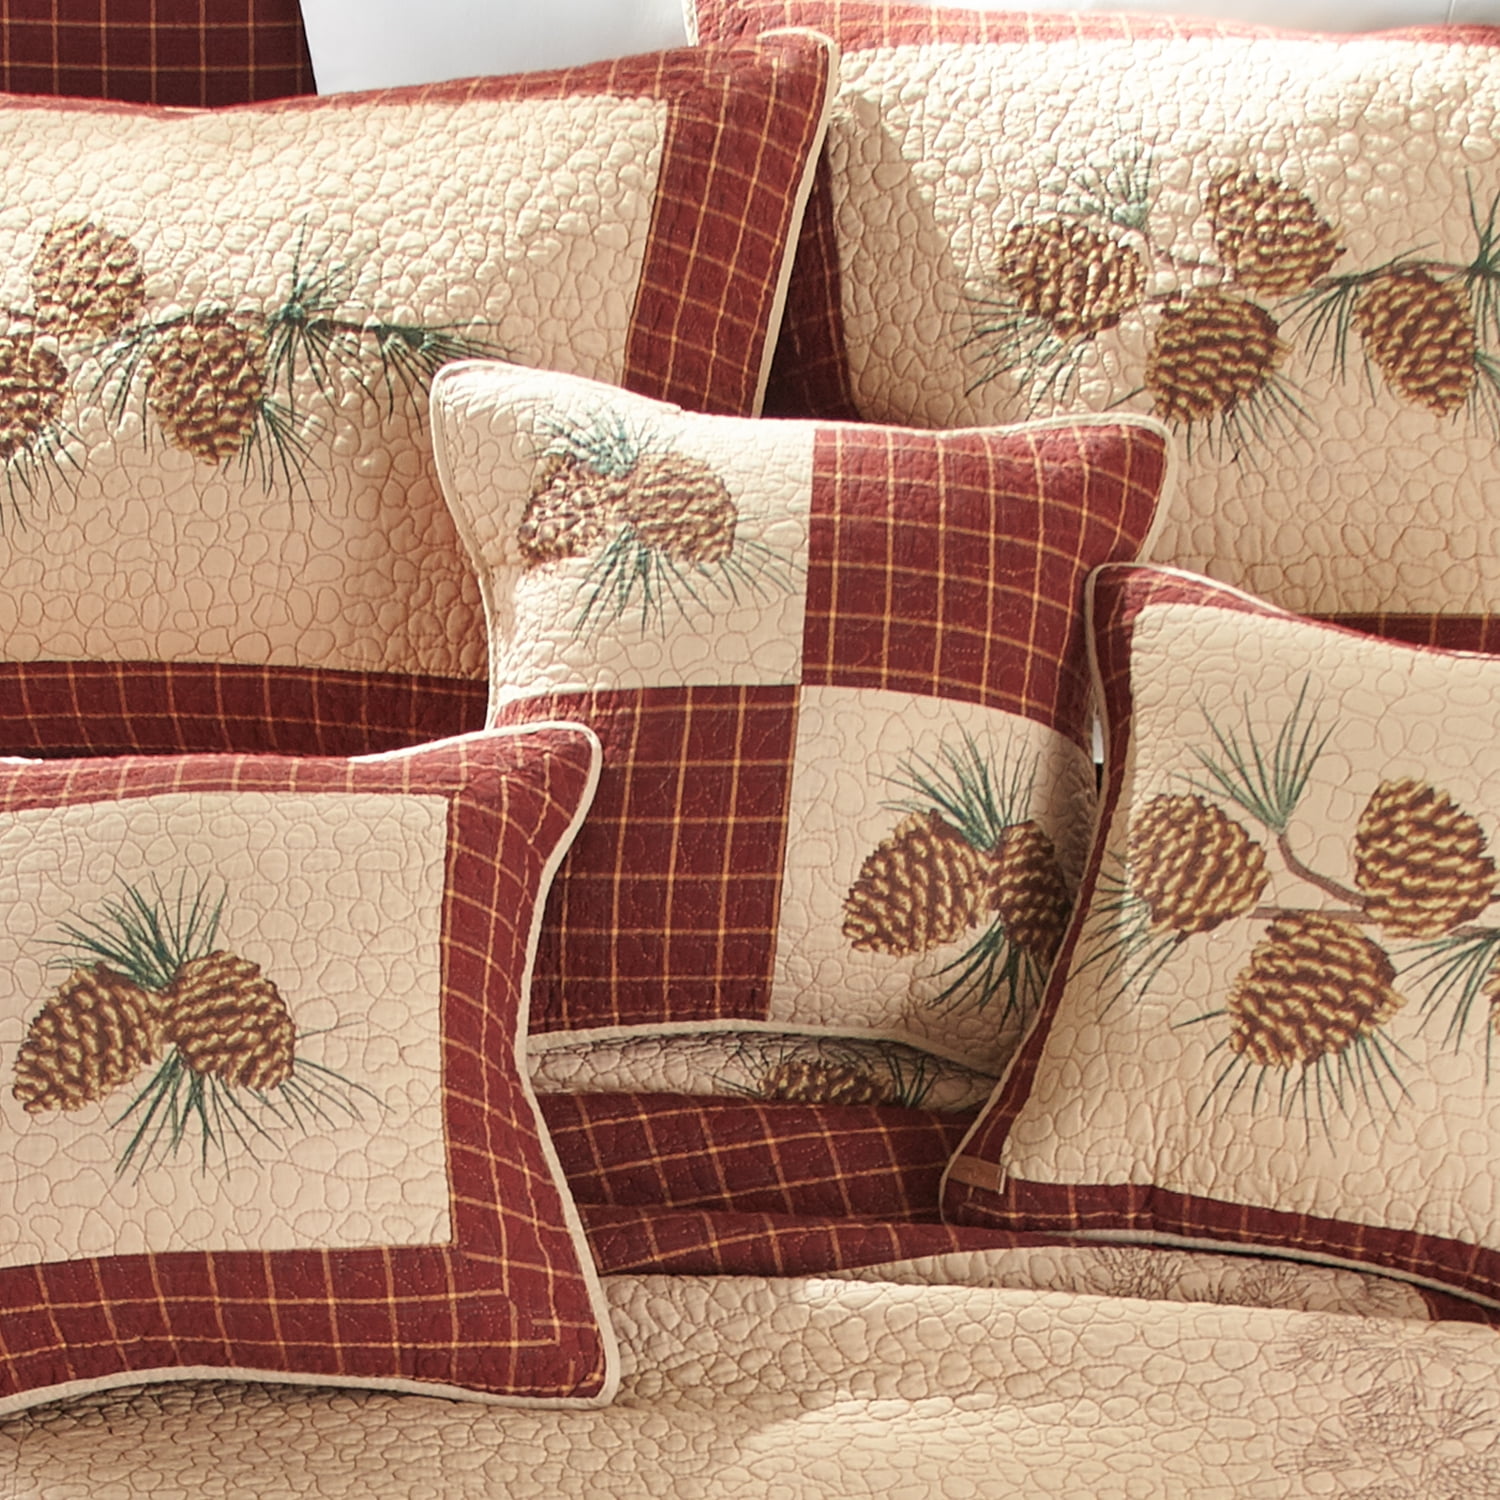 80101 15 X 15 In. Pine Lodge Decorative Pillow - Brick Red, Caramel & Tan